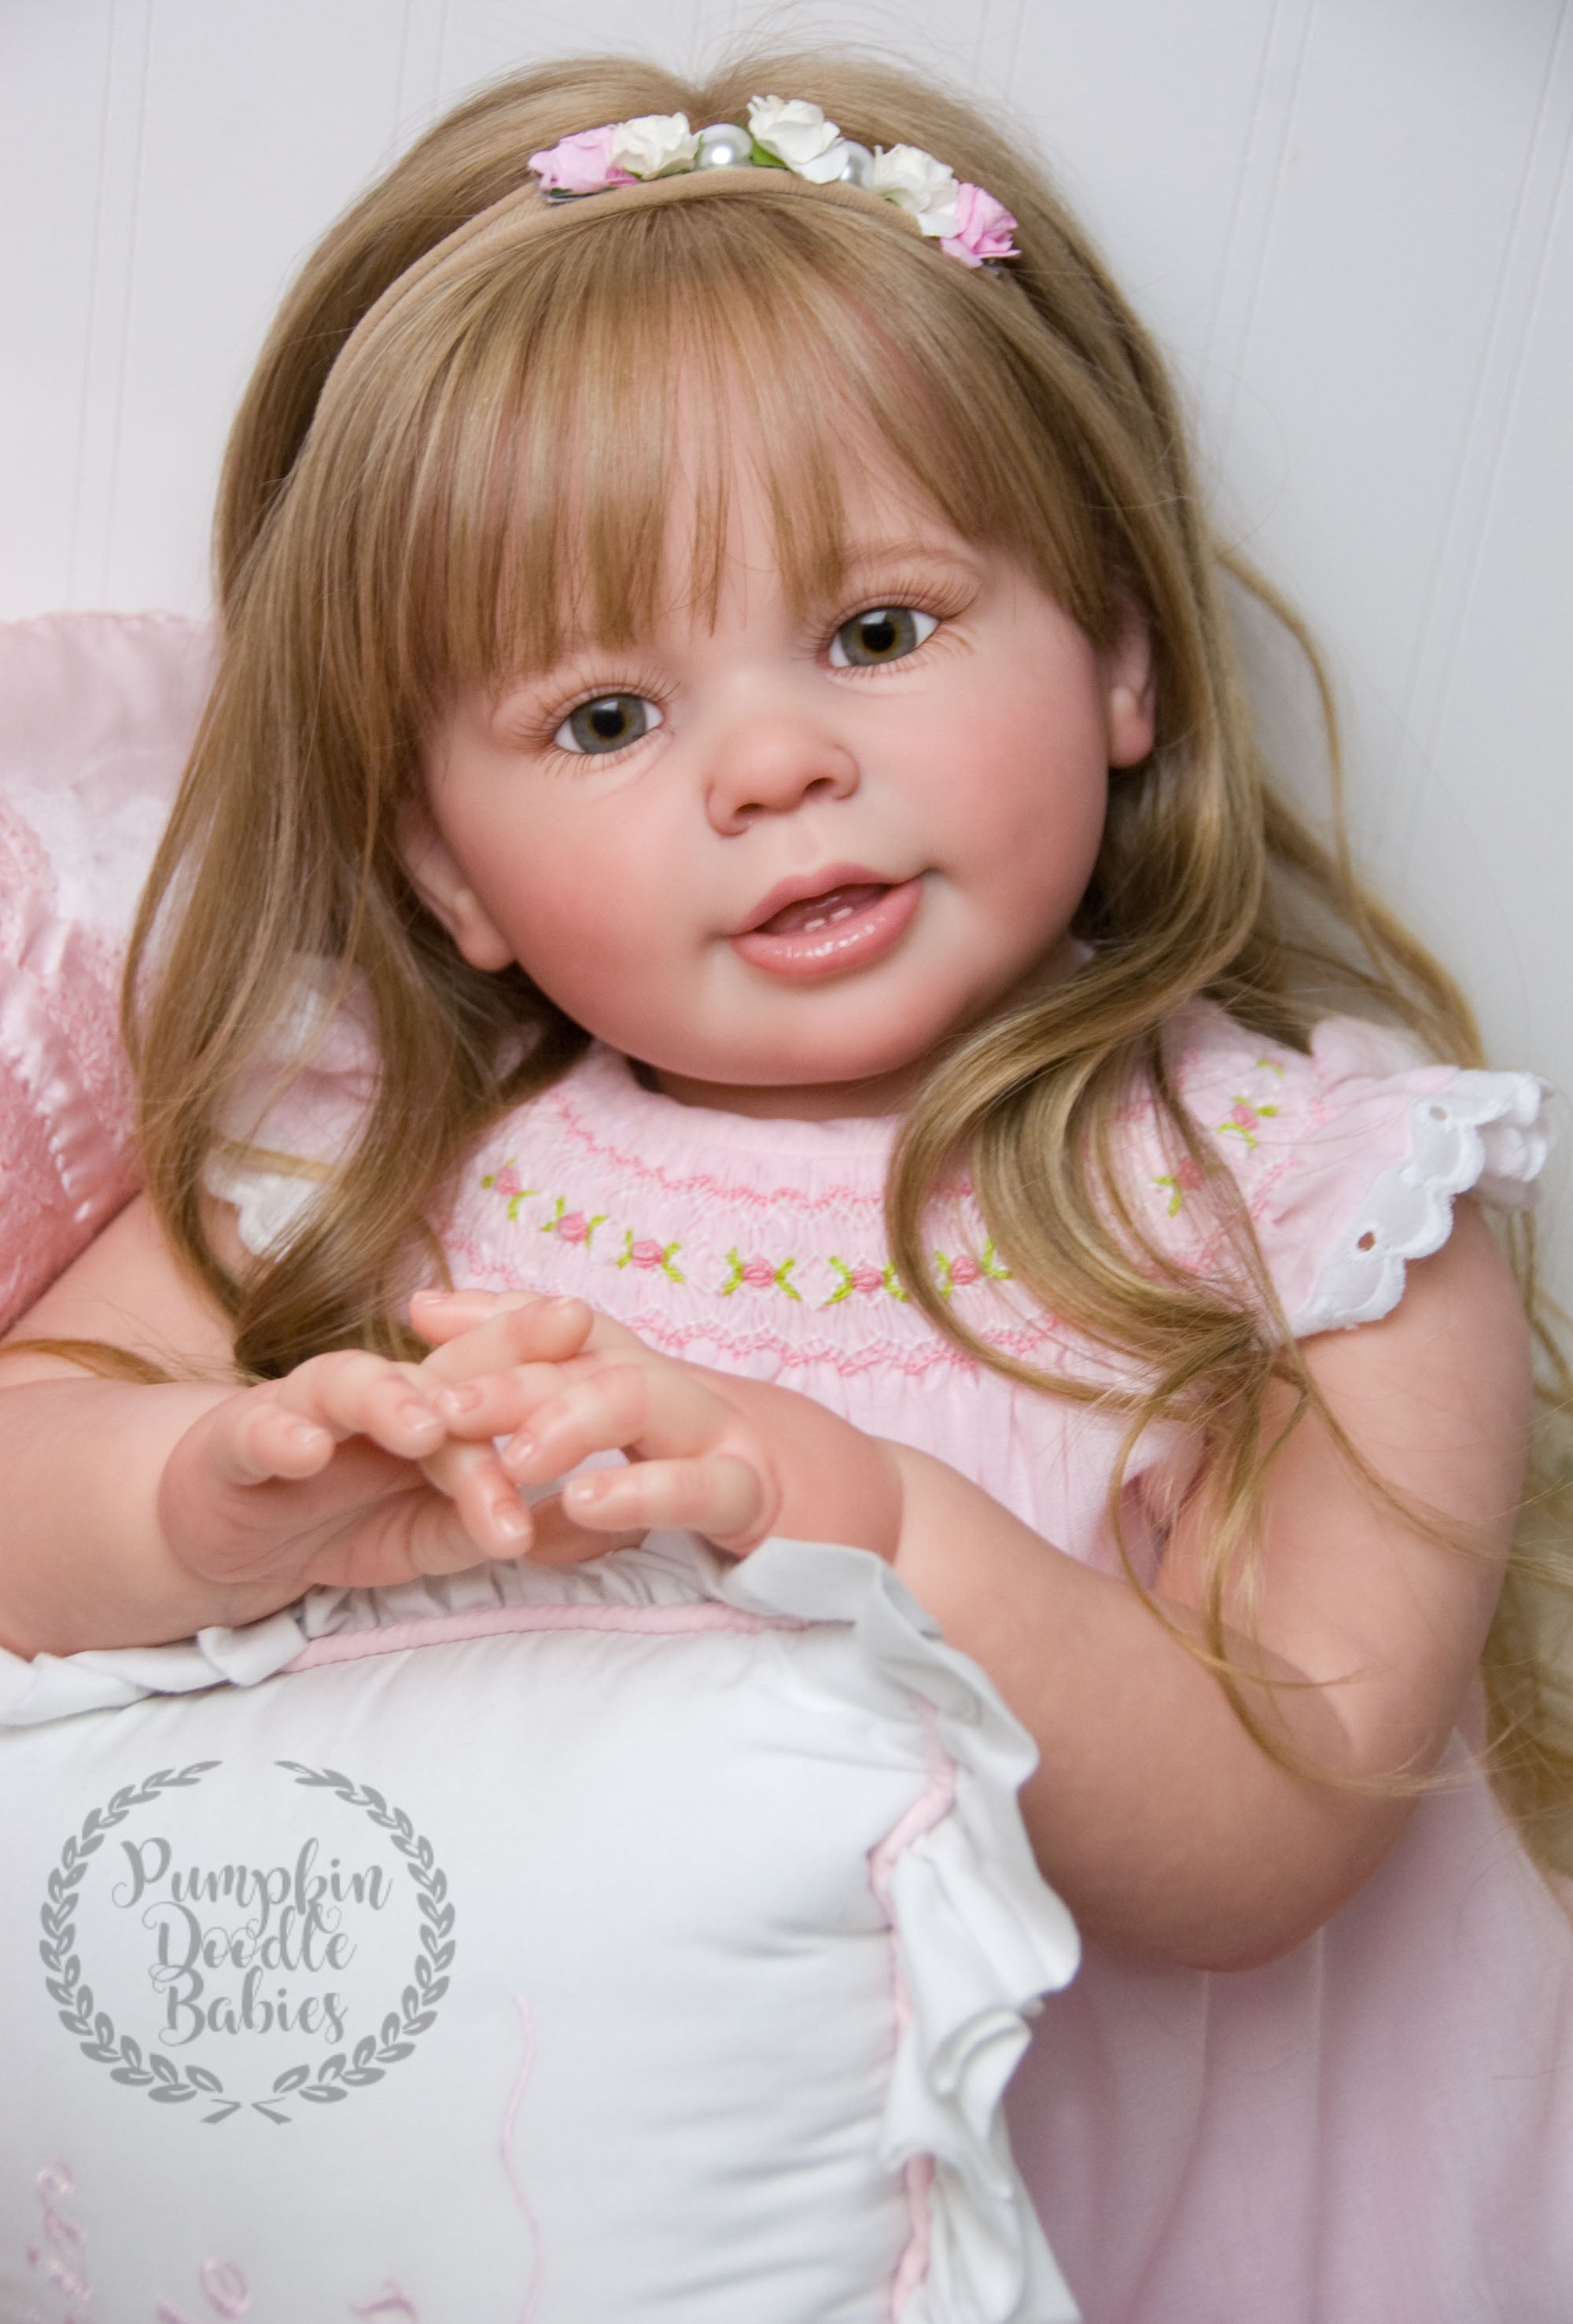 CUSTOM ORDER New Release Reborn Toddler Doll Baby Girl Raya by